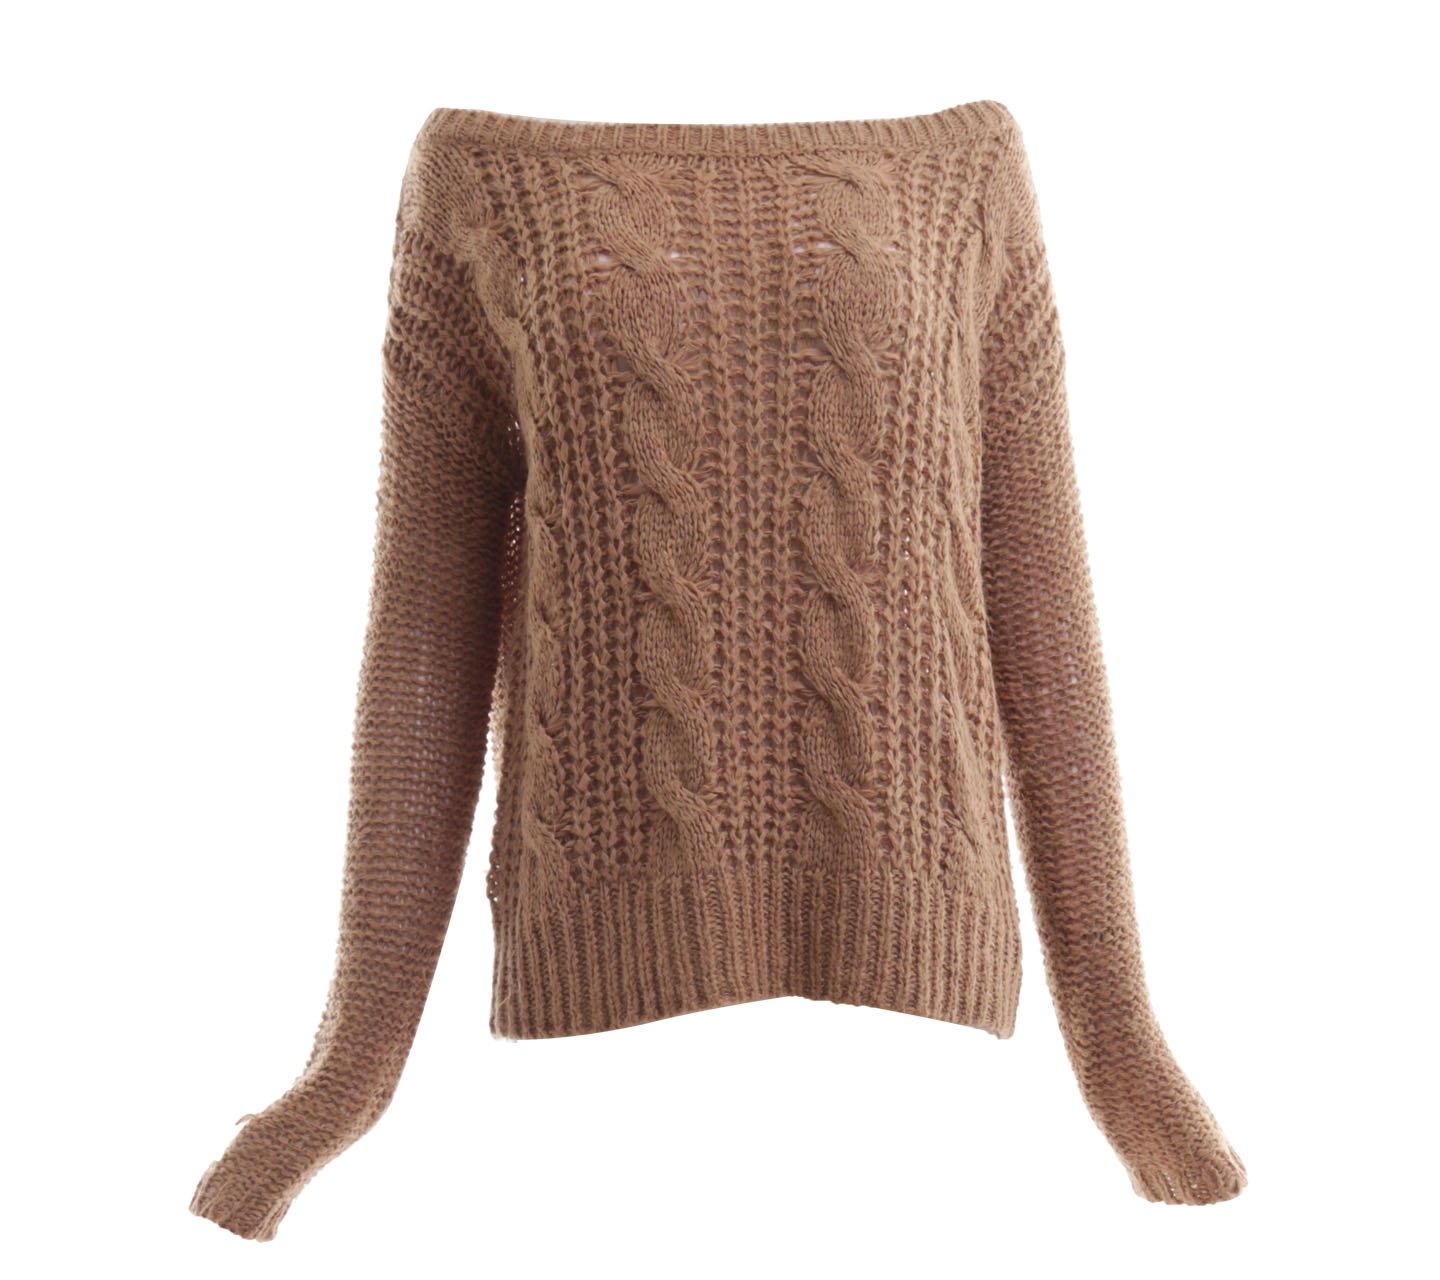 Stradivarius Brown Knit Sweater